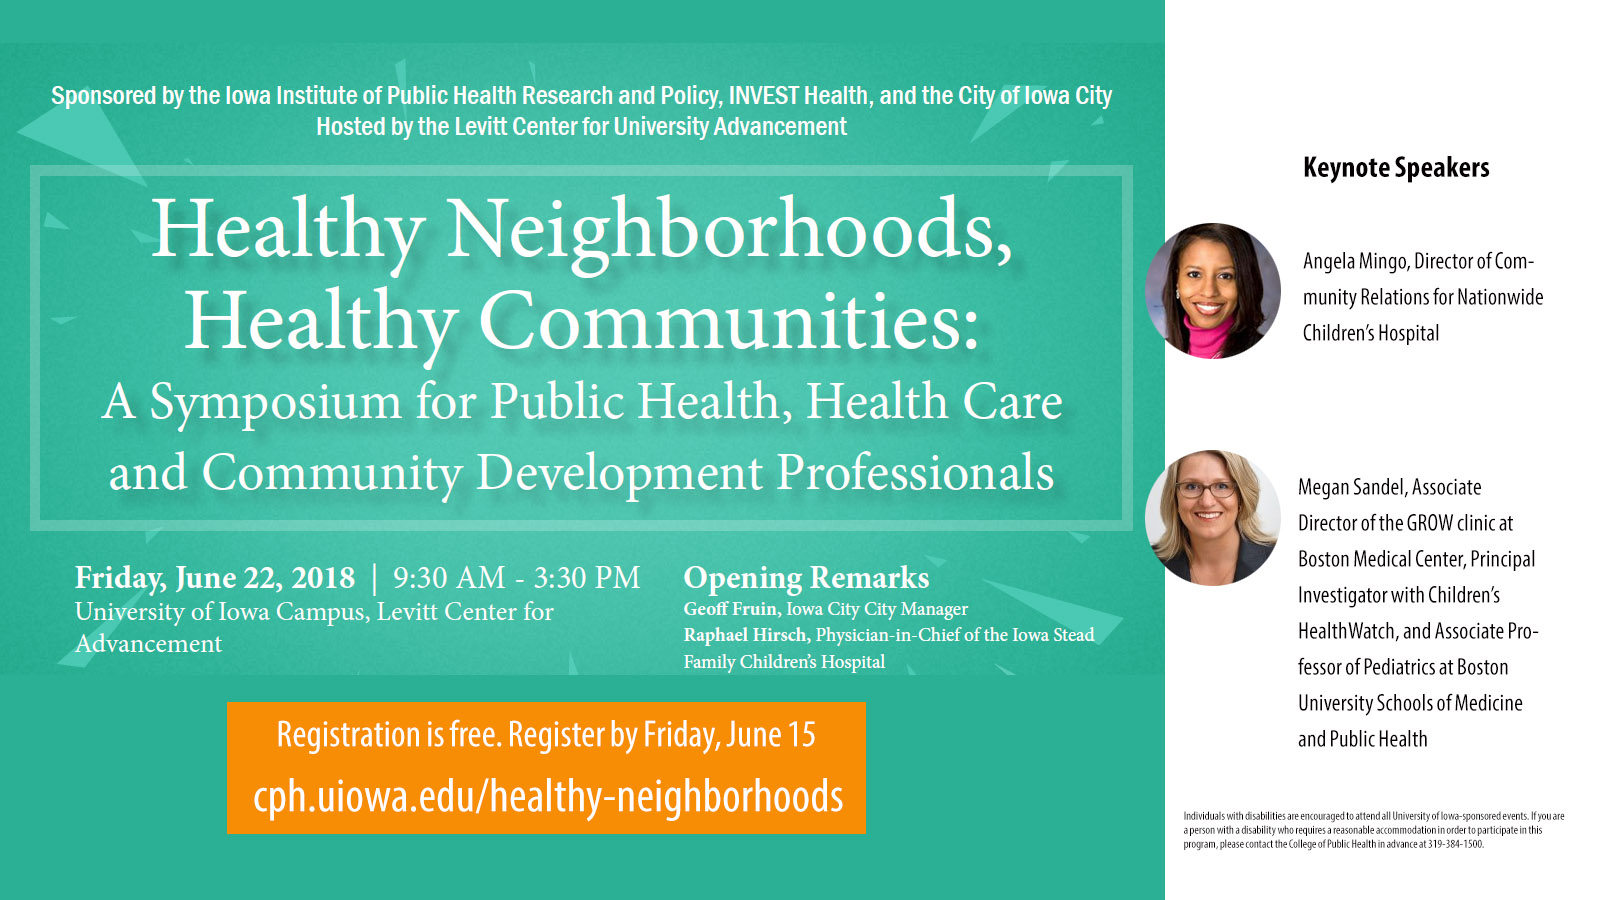 Healthy Neighborhoods, Healthy Communities Symposium is June 22, 2018 in CPHB